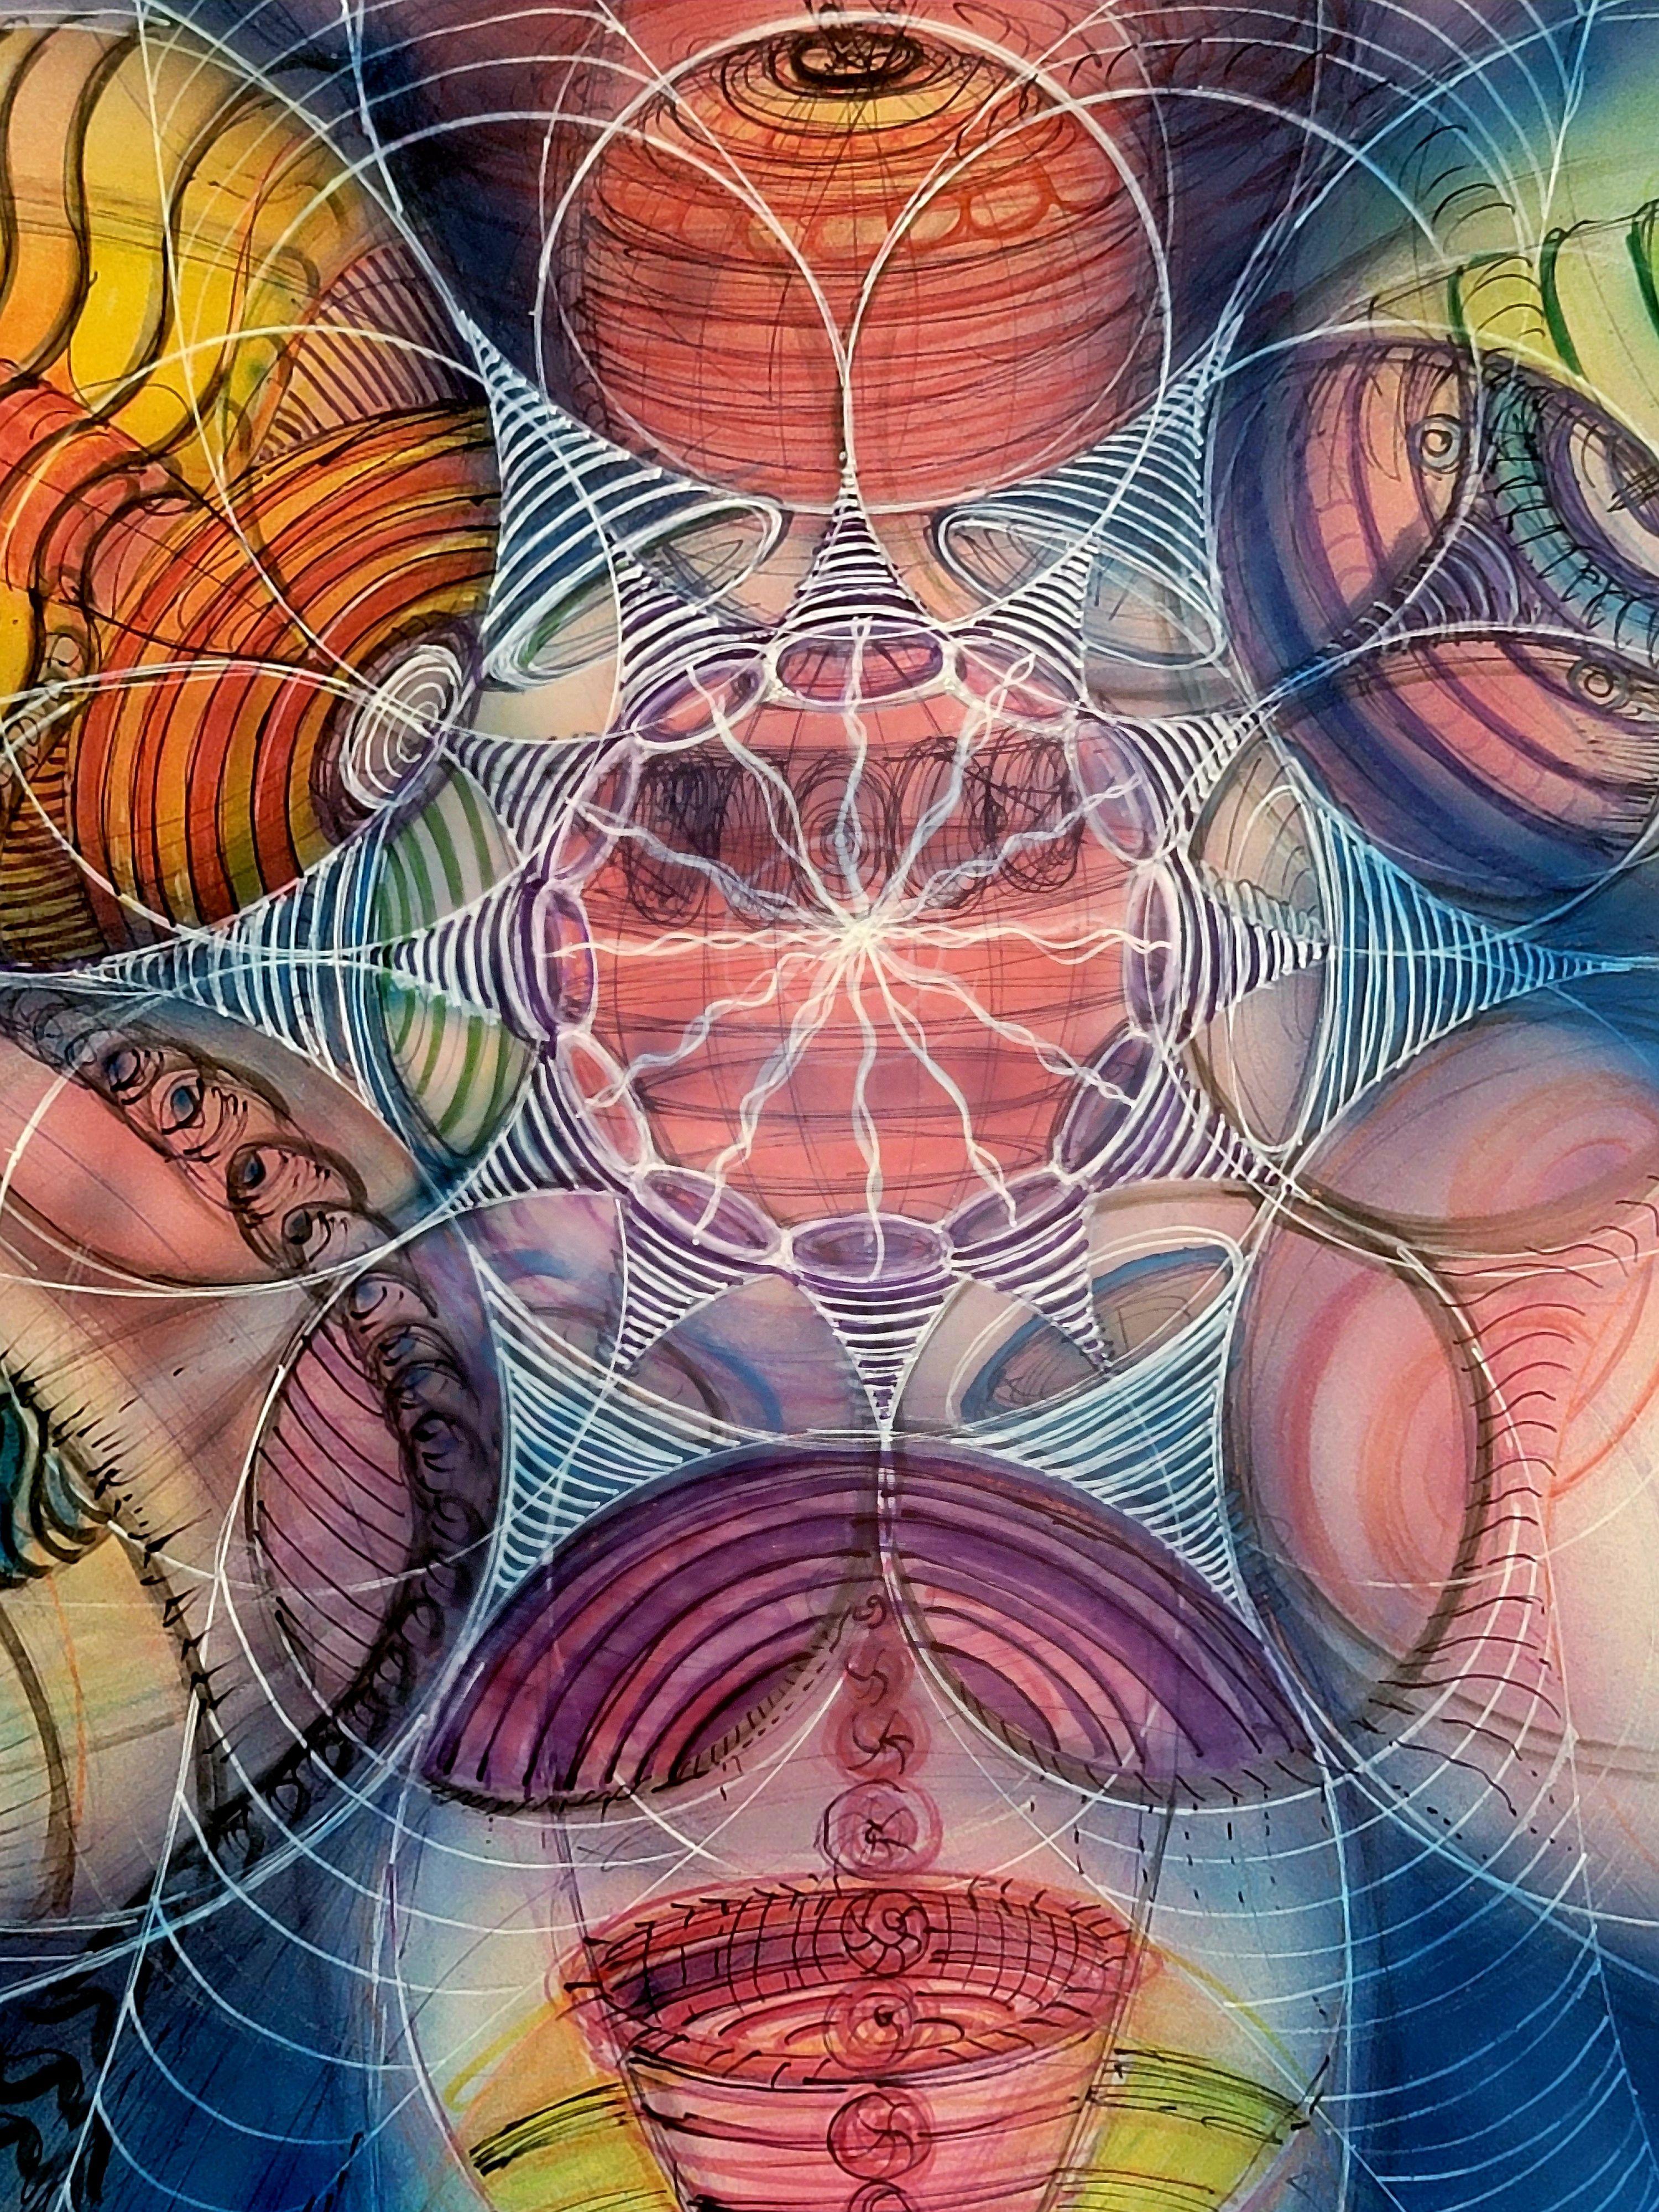 Vibrating Spheres, Mixed Media on Paper - Other Art Style Mixed Media Art by Sanjoy Das